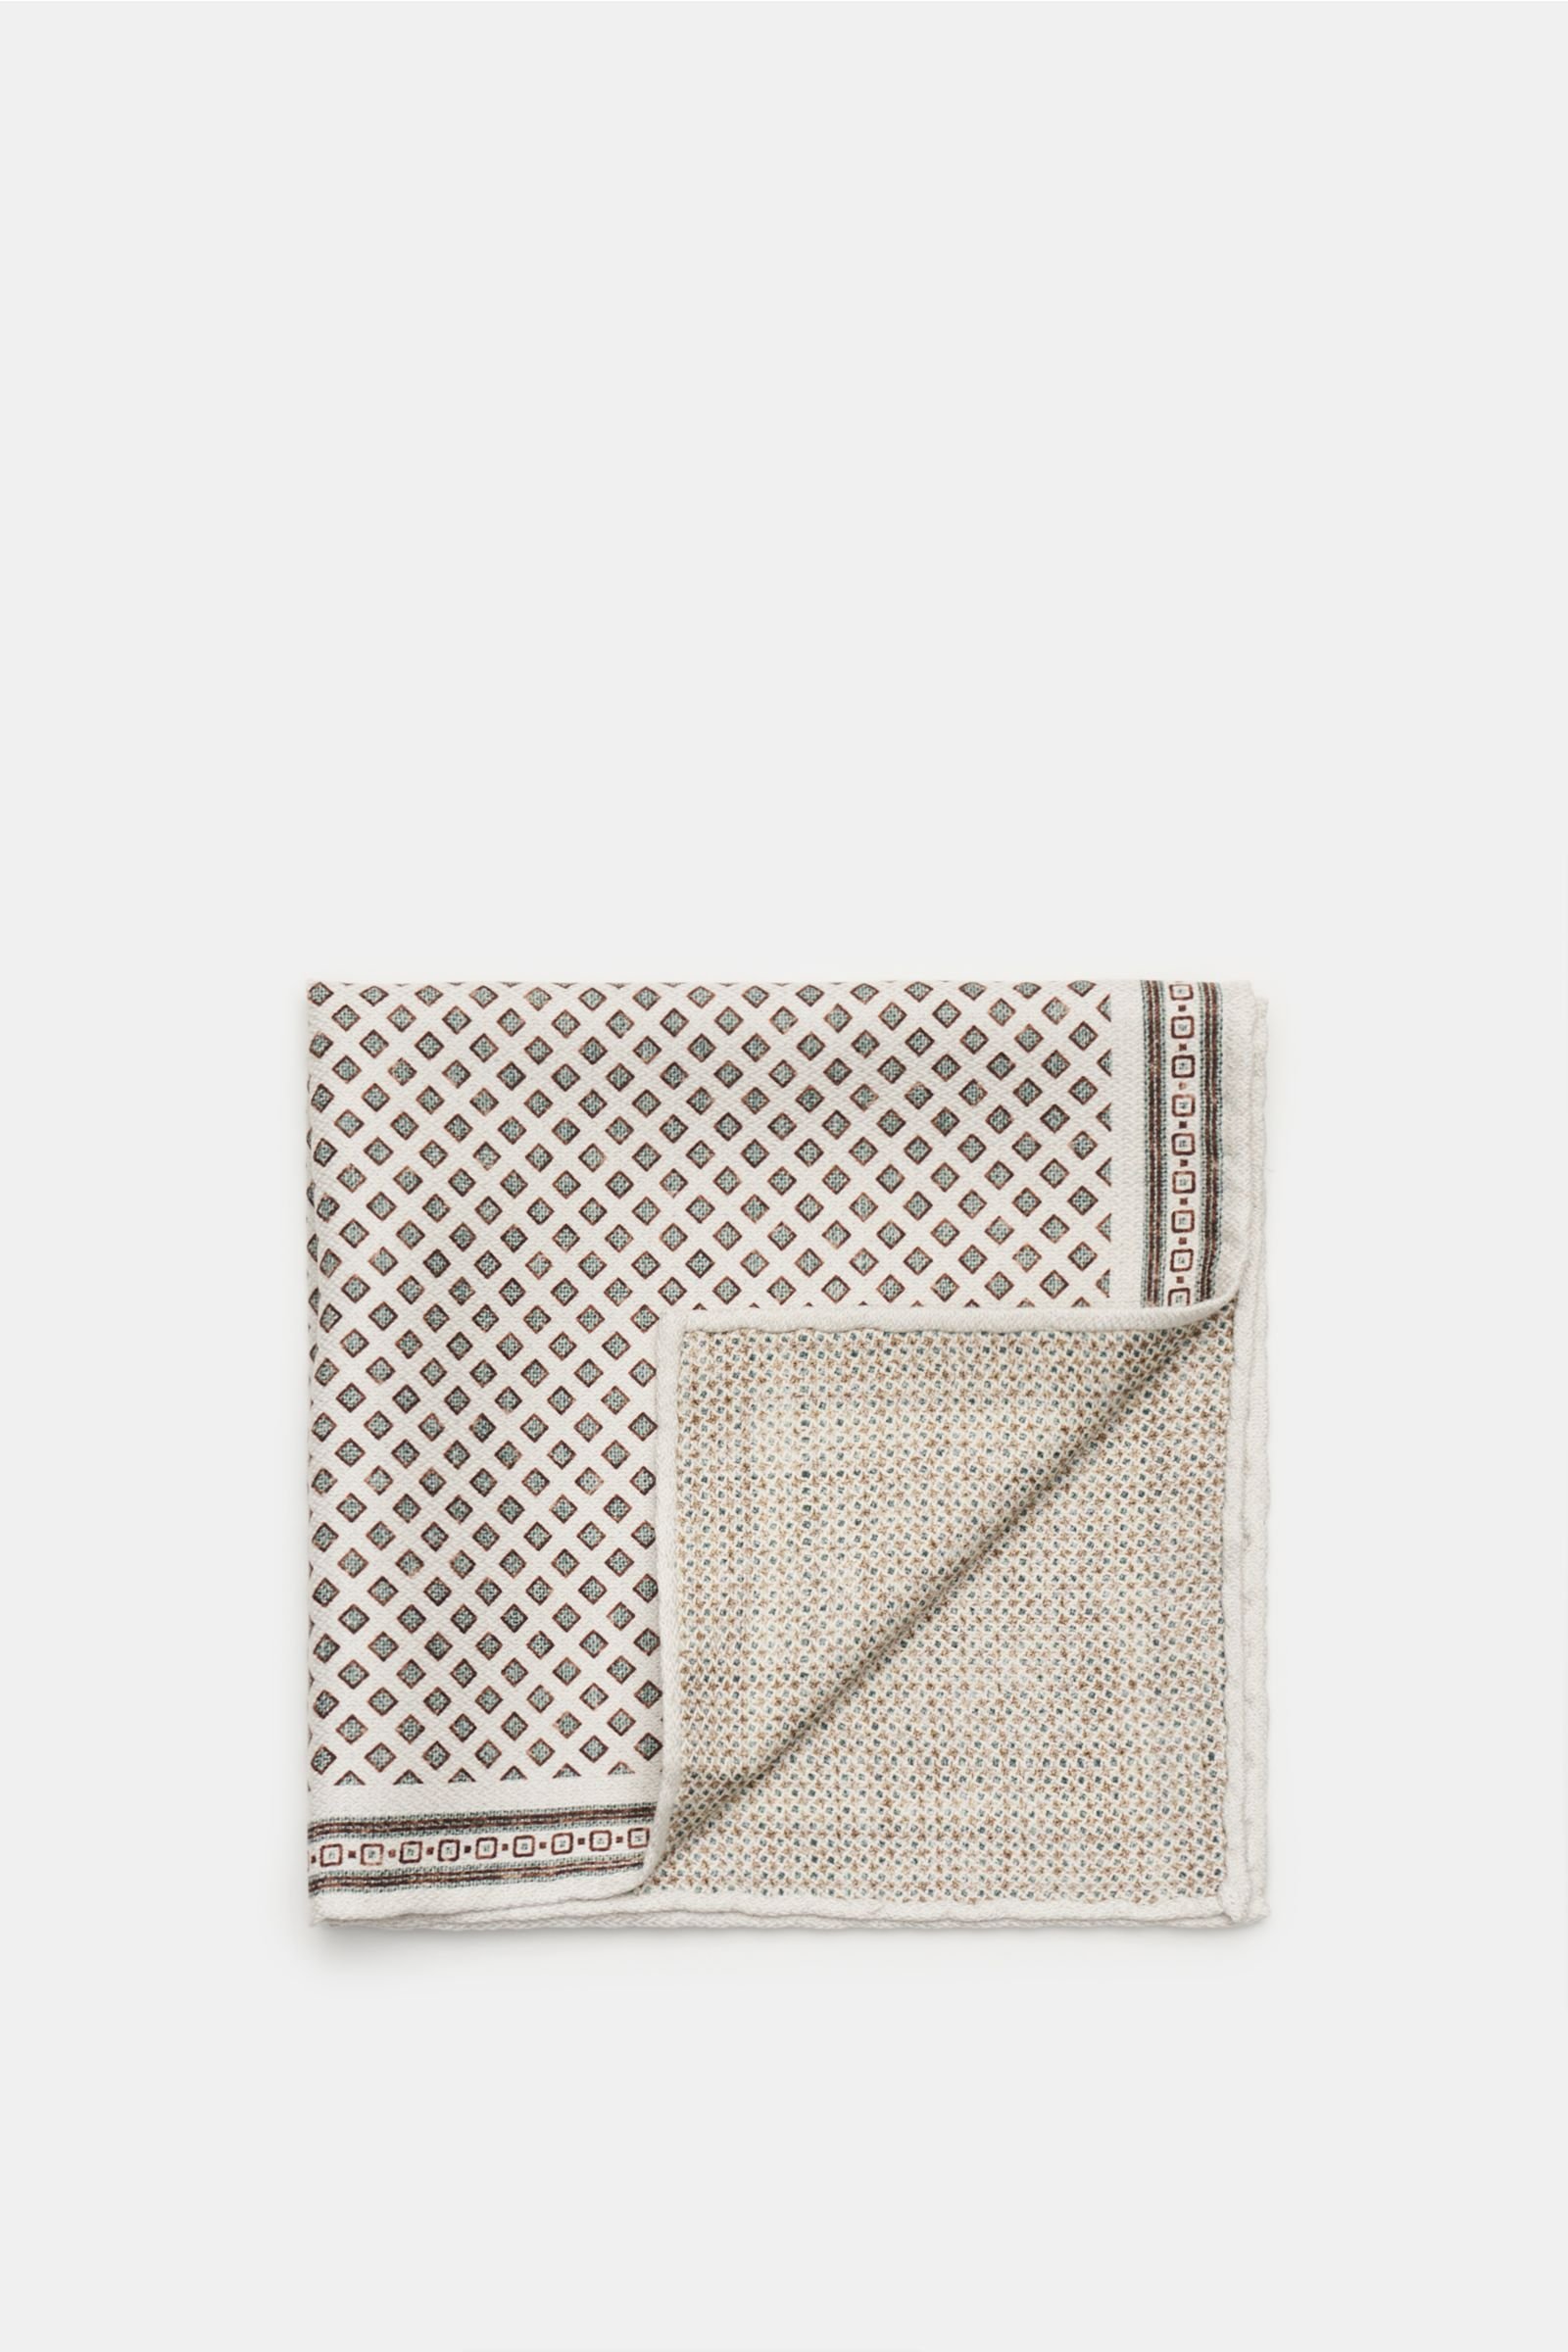 Pocket square cream/grey-green patterned